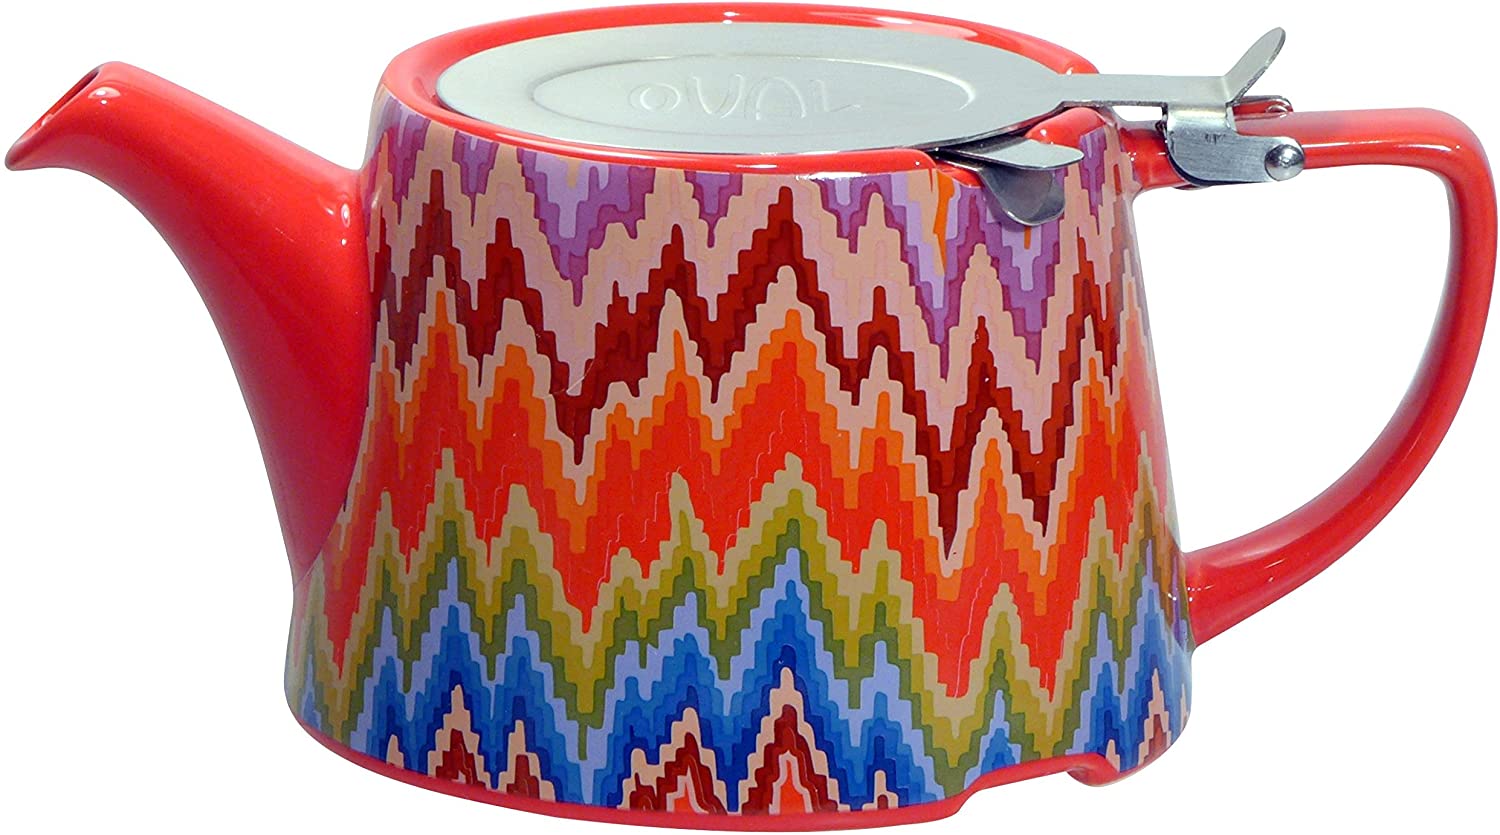 London Pottery Company Kaffe Fassett Oval Ceramic Egg Filter Teapot 800ml (28 Fl Oz) – Flame Stitch